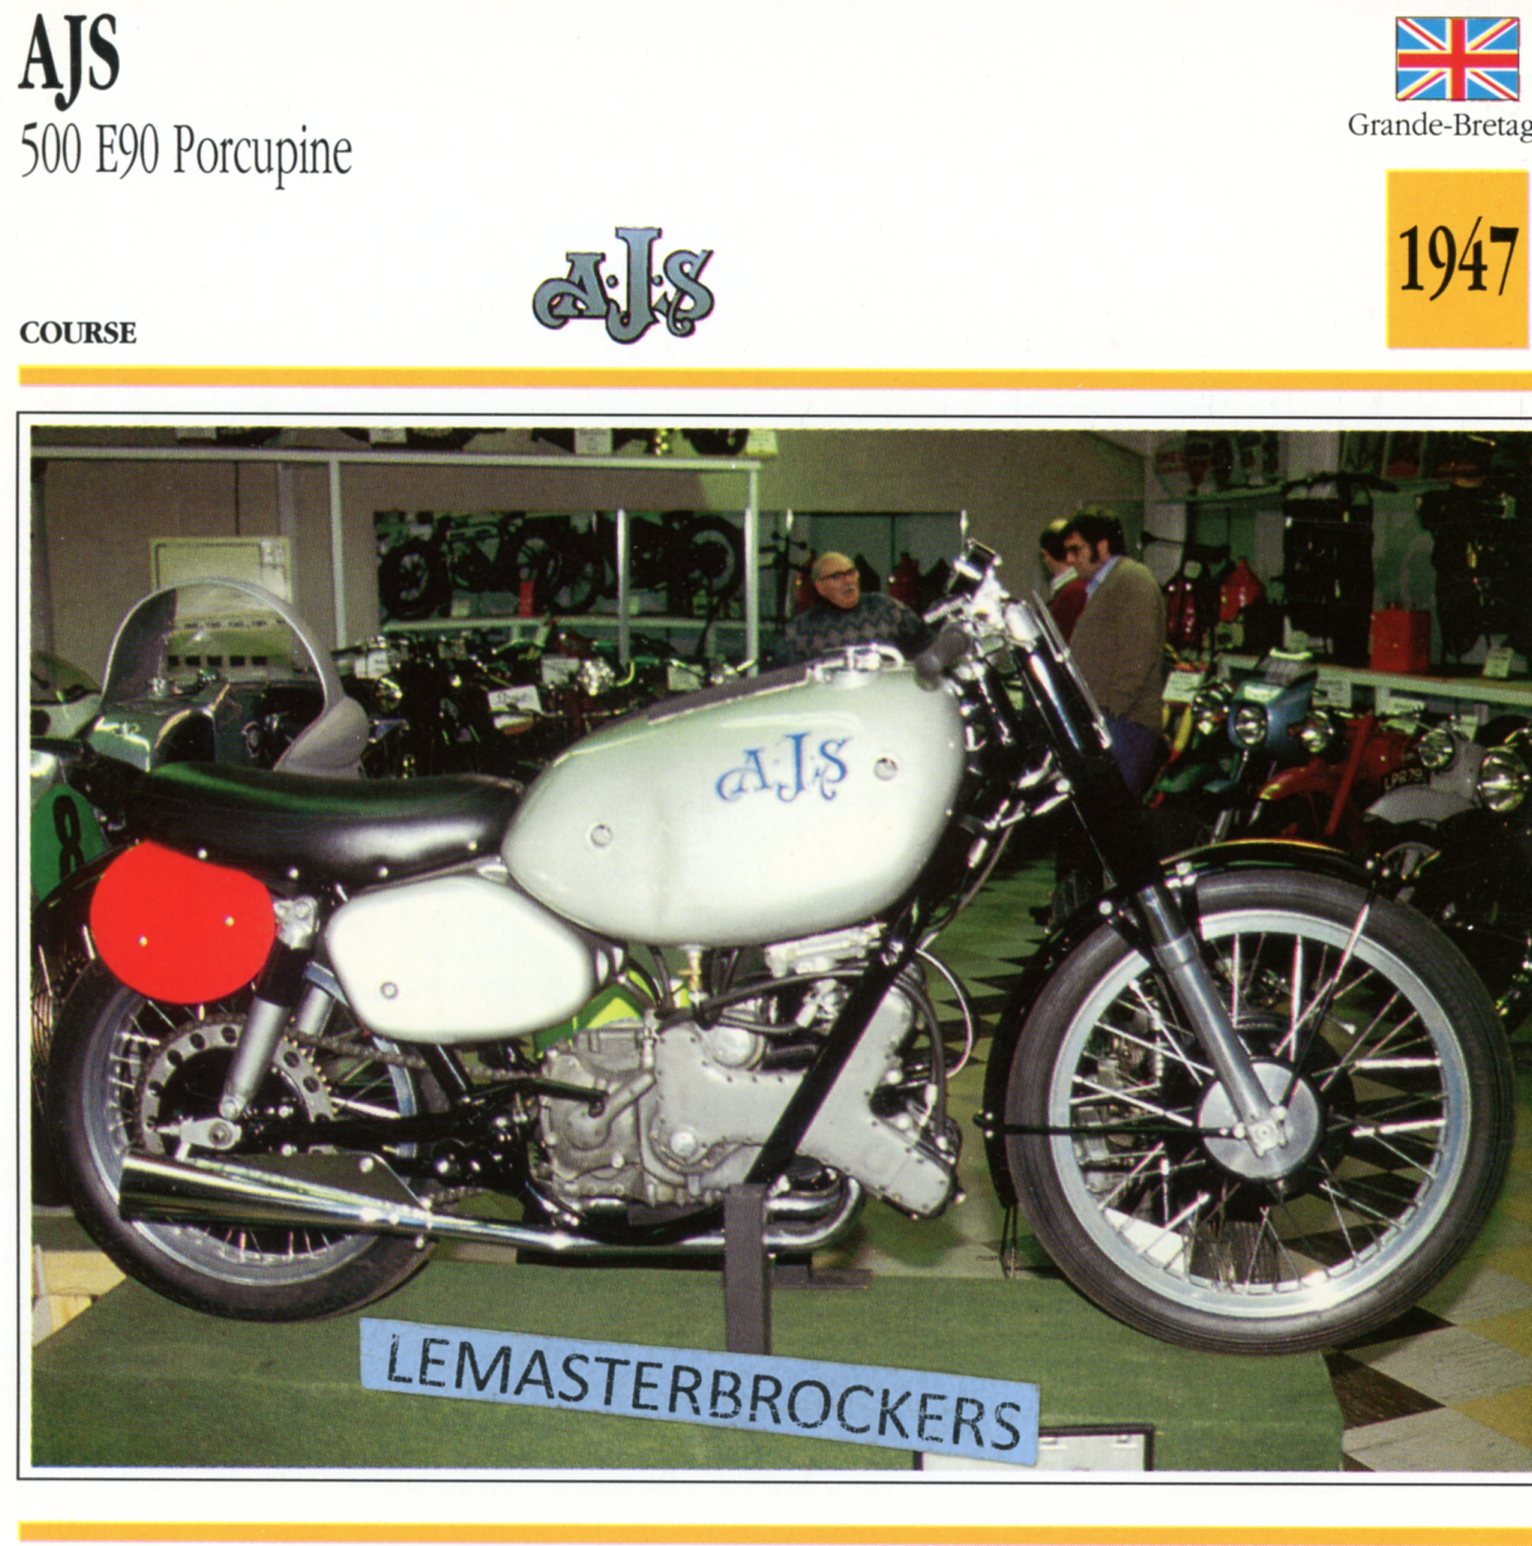 AJS E90 PORCUPINE-1947-CARTE-CARD-FICHE-MOTO-LEMASTERBROCKERS